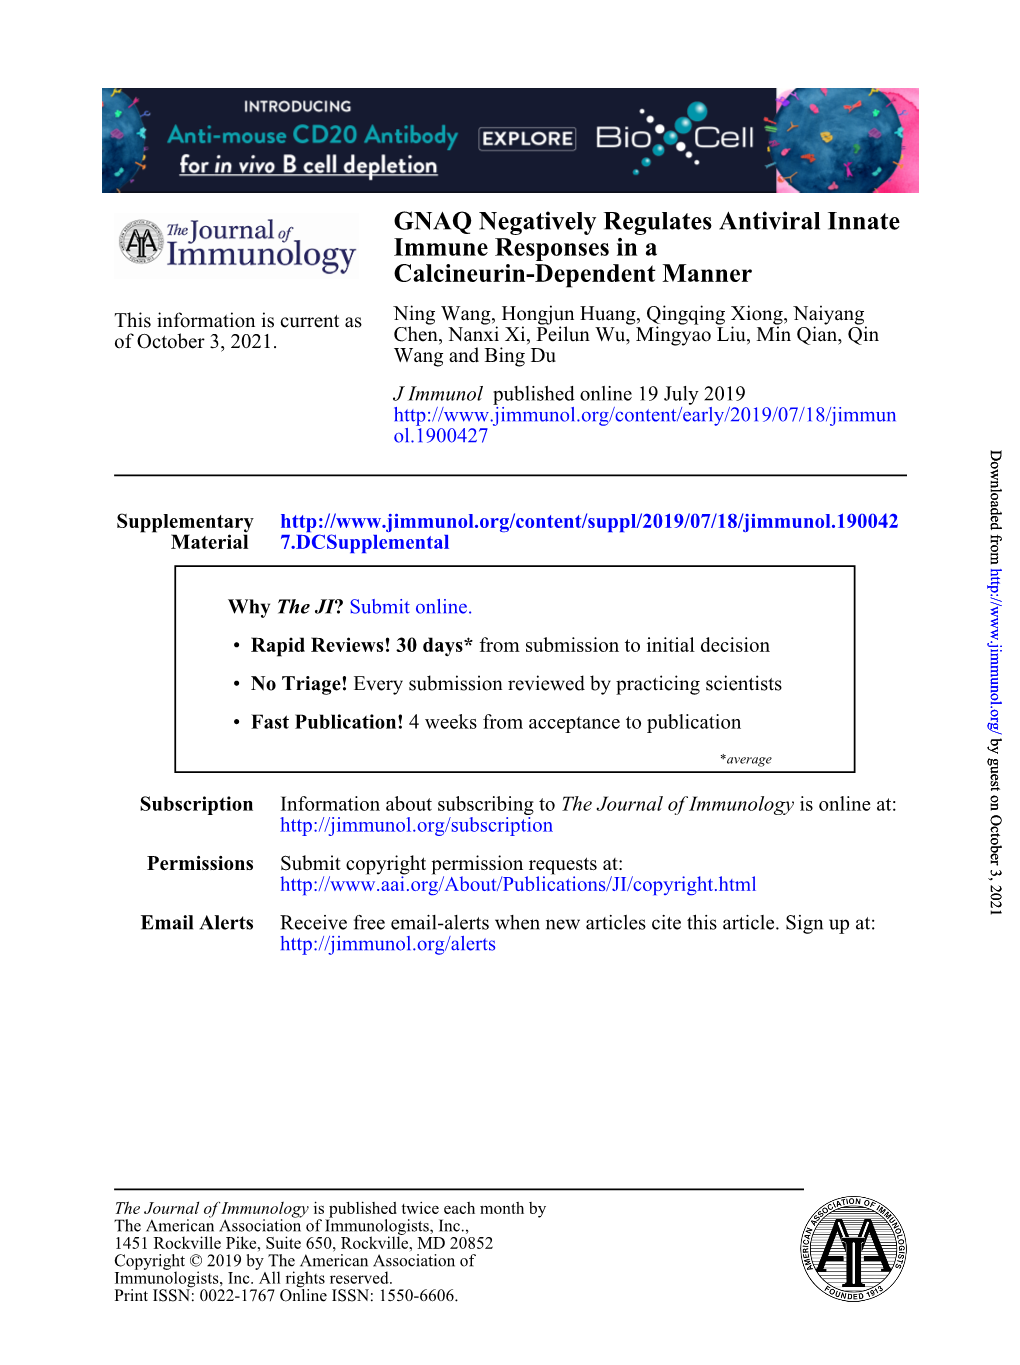 GNAQ Negatively Regulates Antiviral Innate Immune Responses in a Calcineurin-Dependent Manner